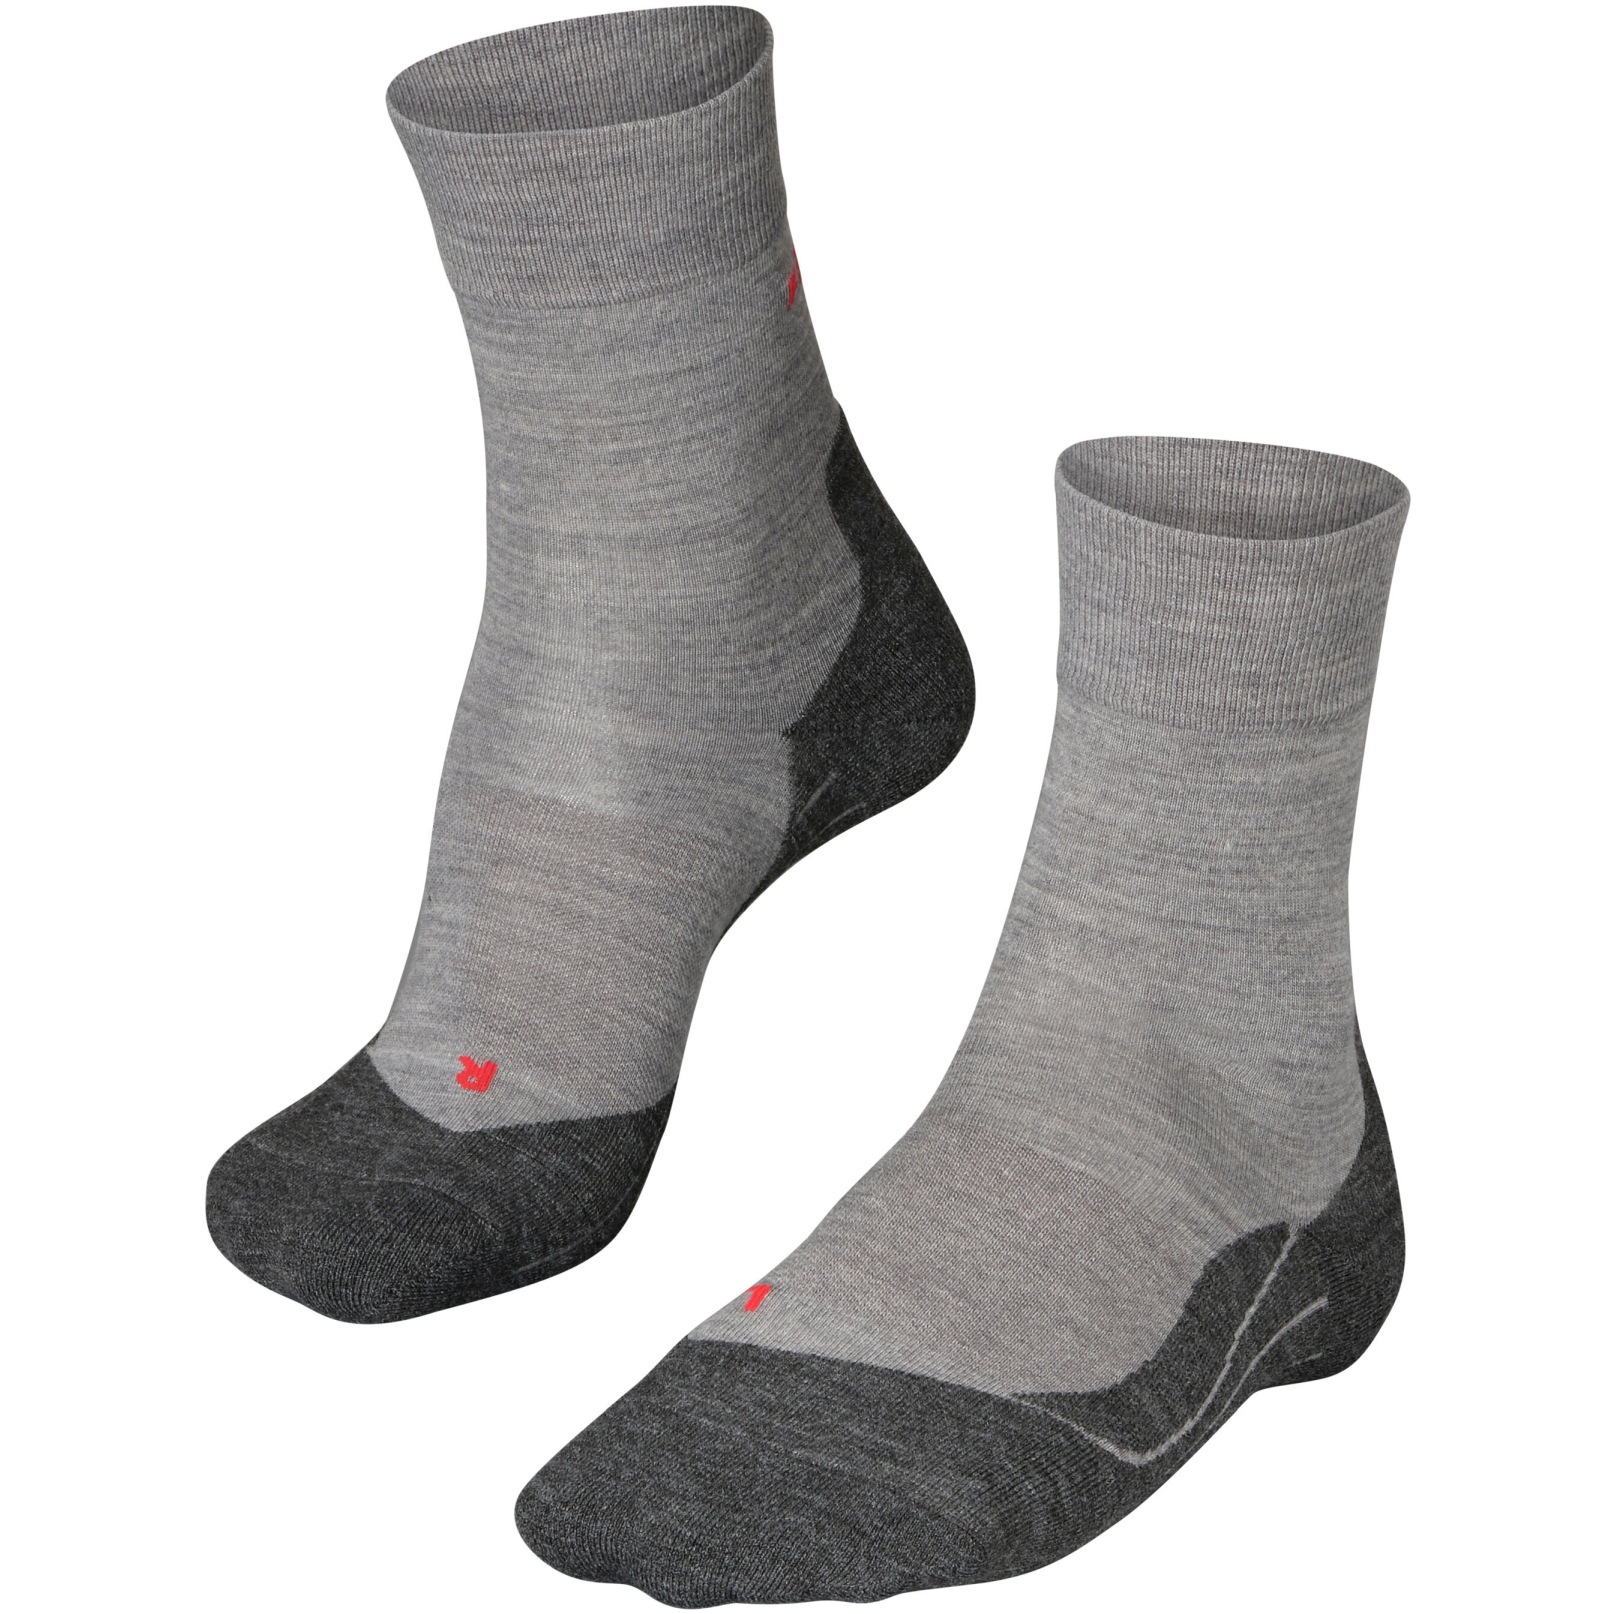 Image of Falke RU4 Endurance Wool Running Socks Men - light grey melange 3830